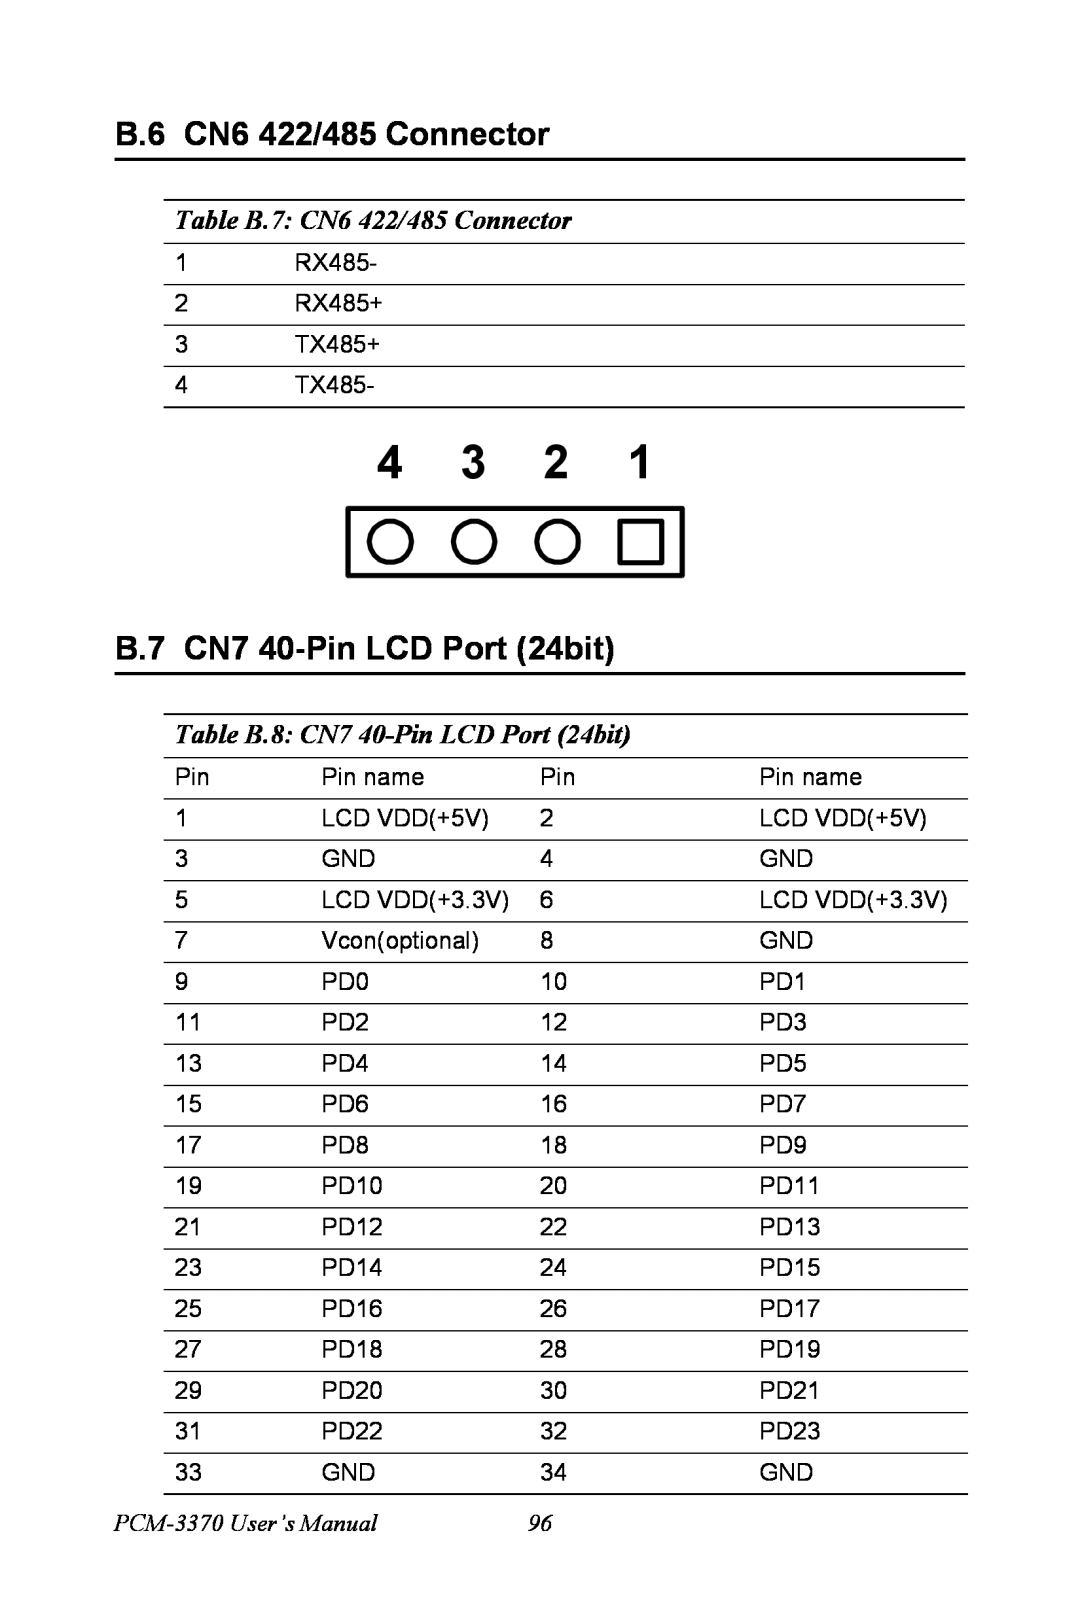 Intel PCM-3370 user manual B.6 CN6 422/485 Connector, B.7 CN7 40-Pin LCD Port 24bit, Table B.7 CN6 422/485 Connector 